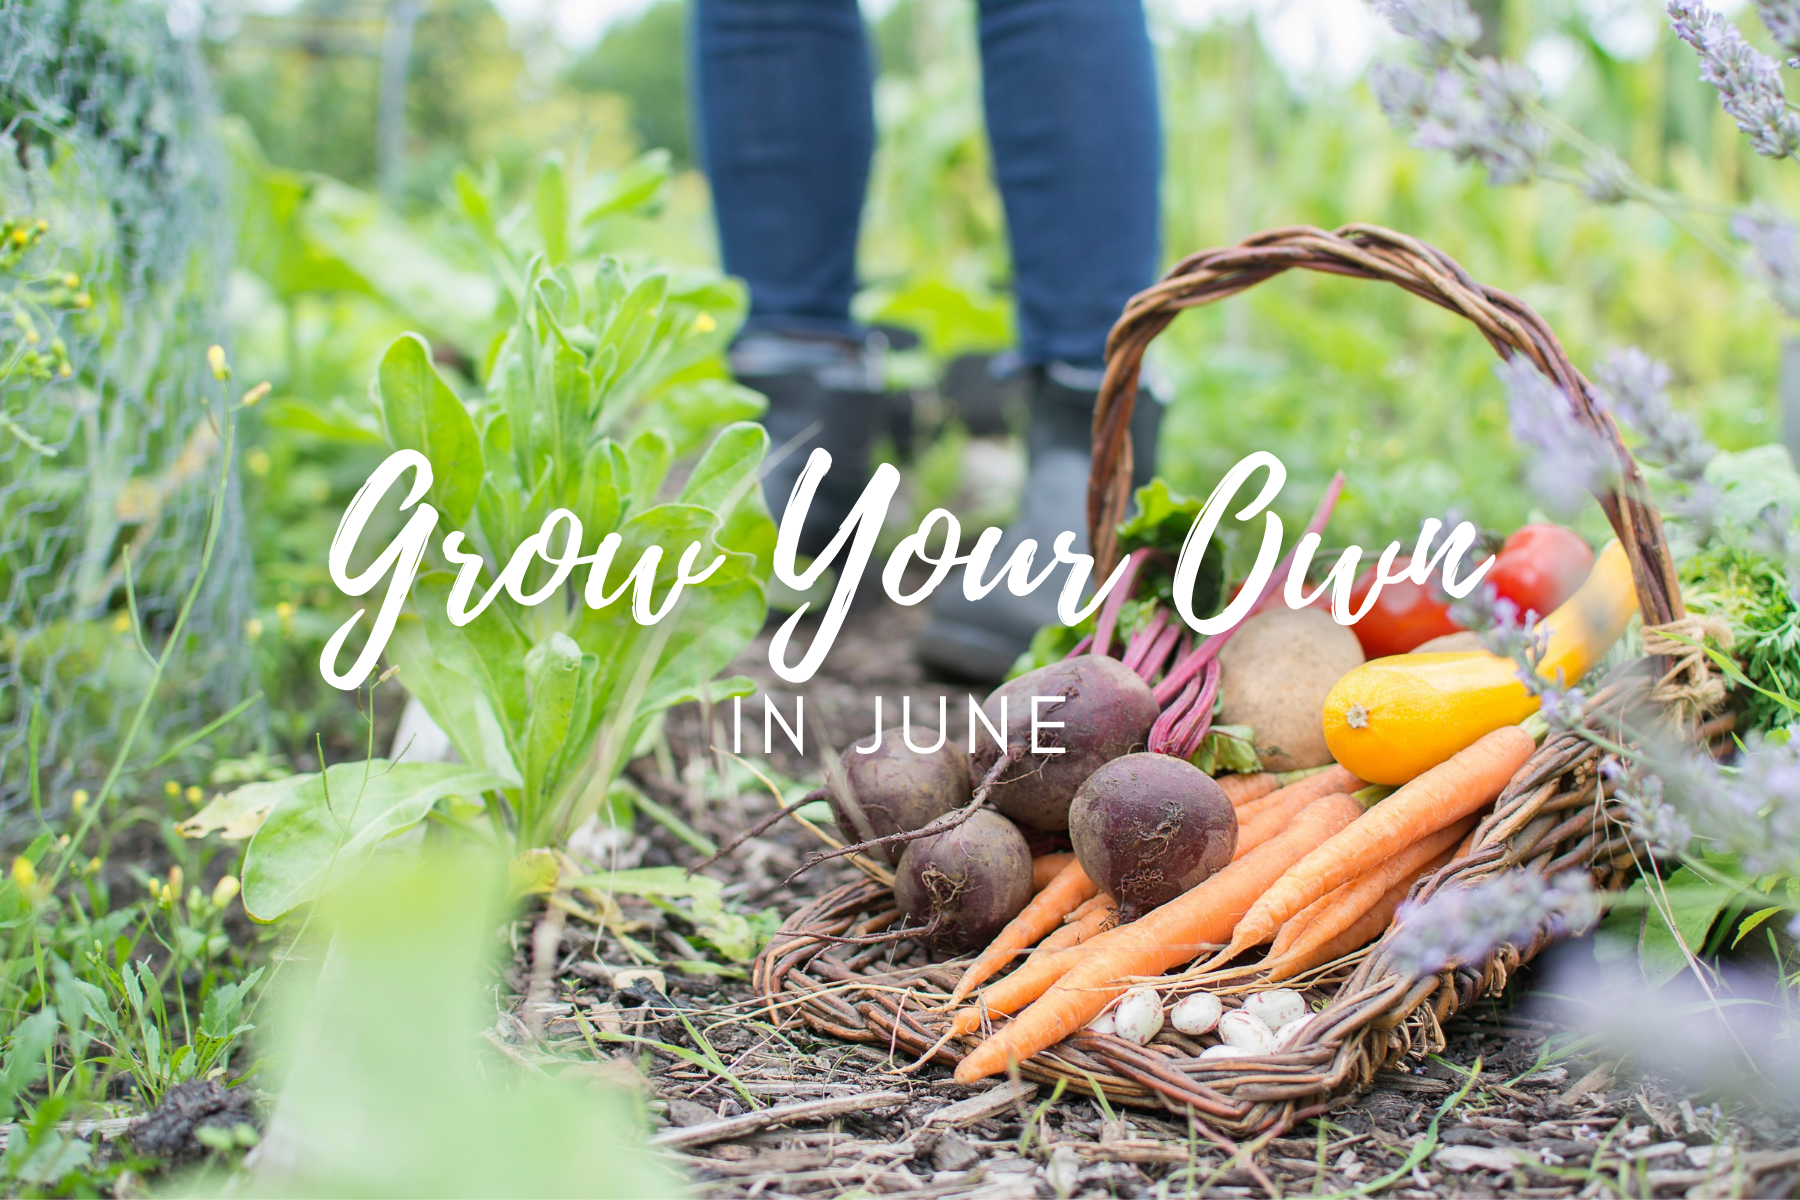 Grow Your Own in June